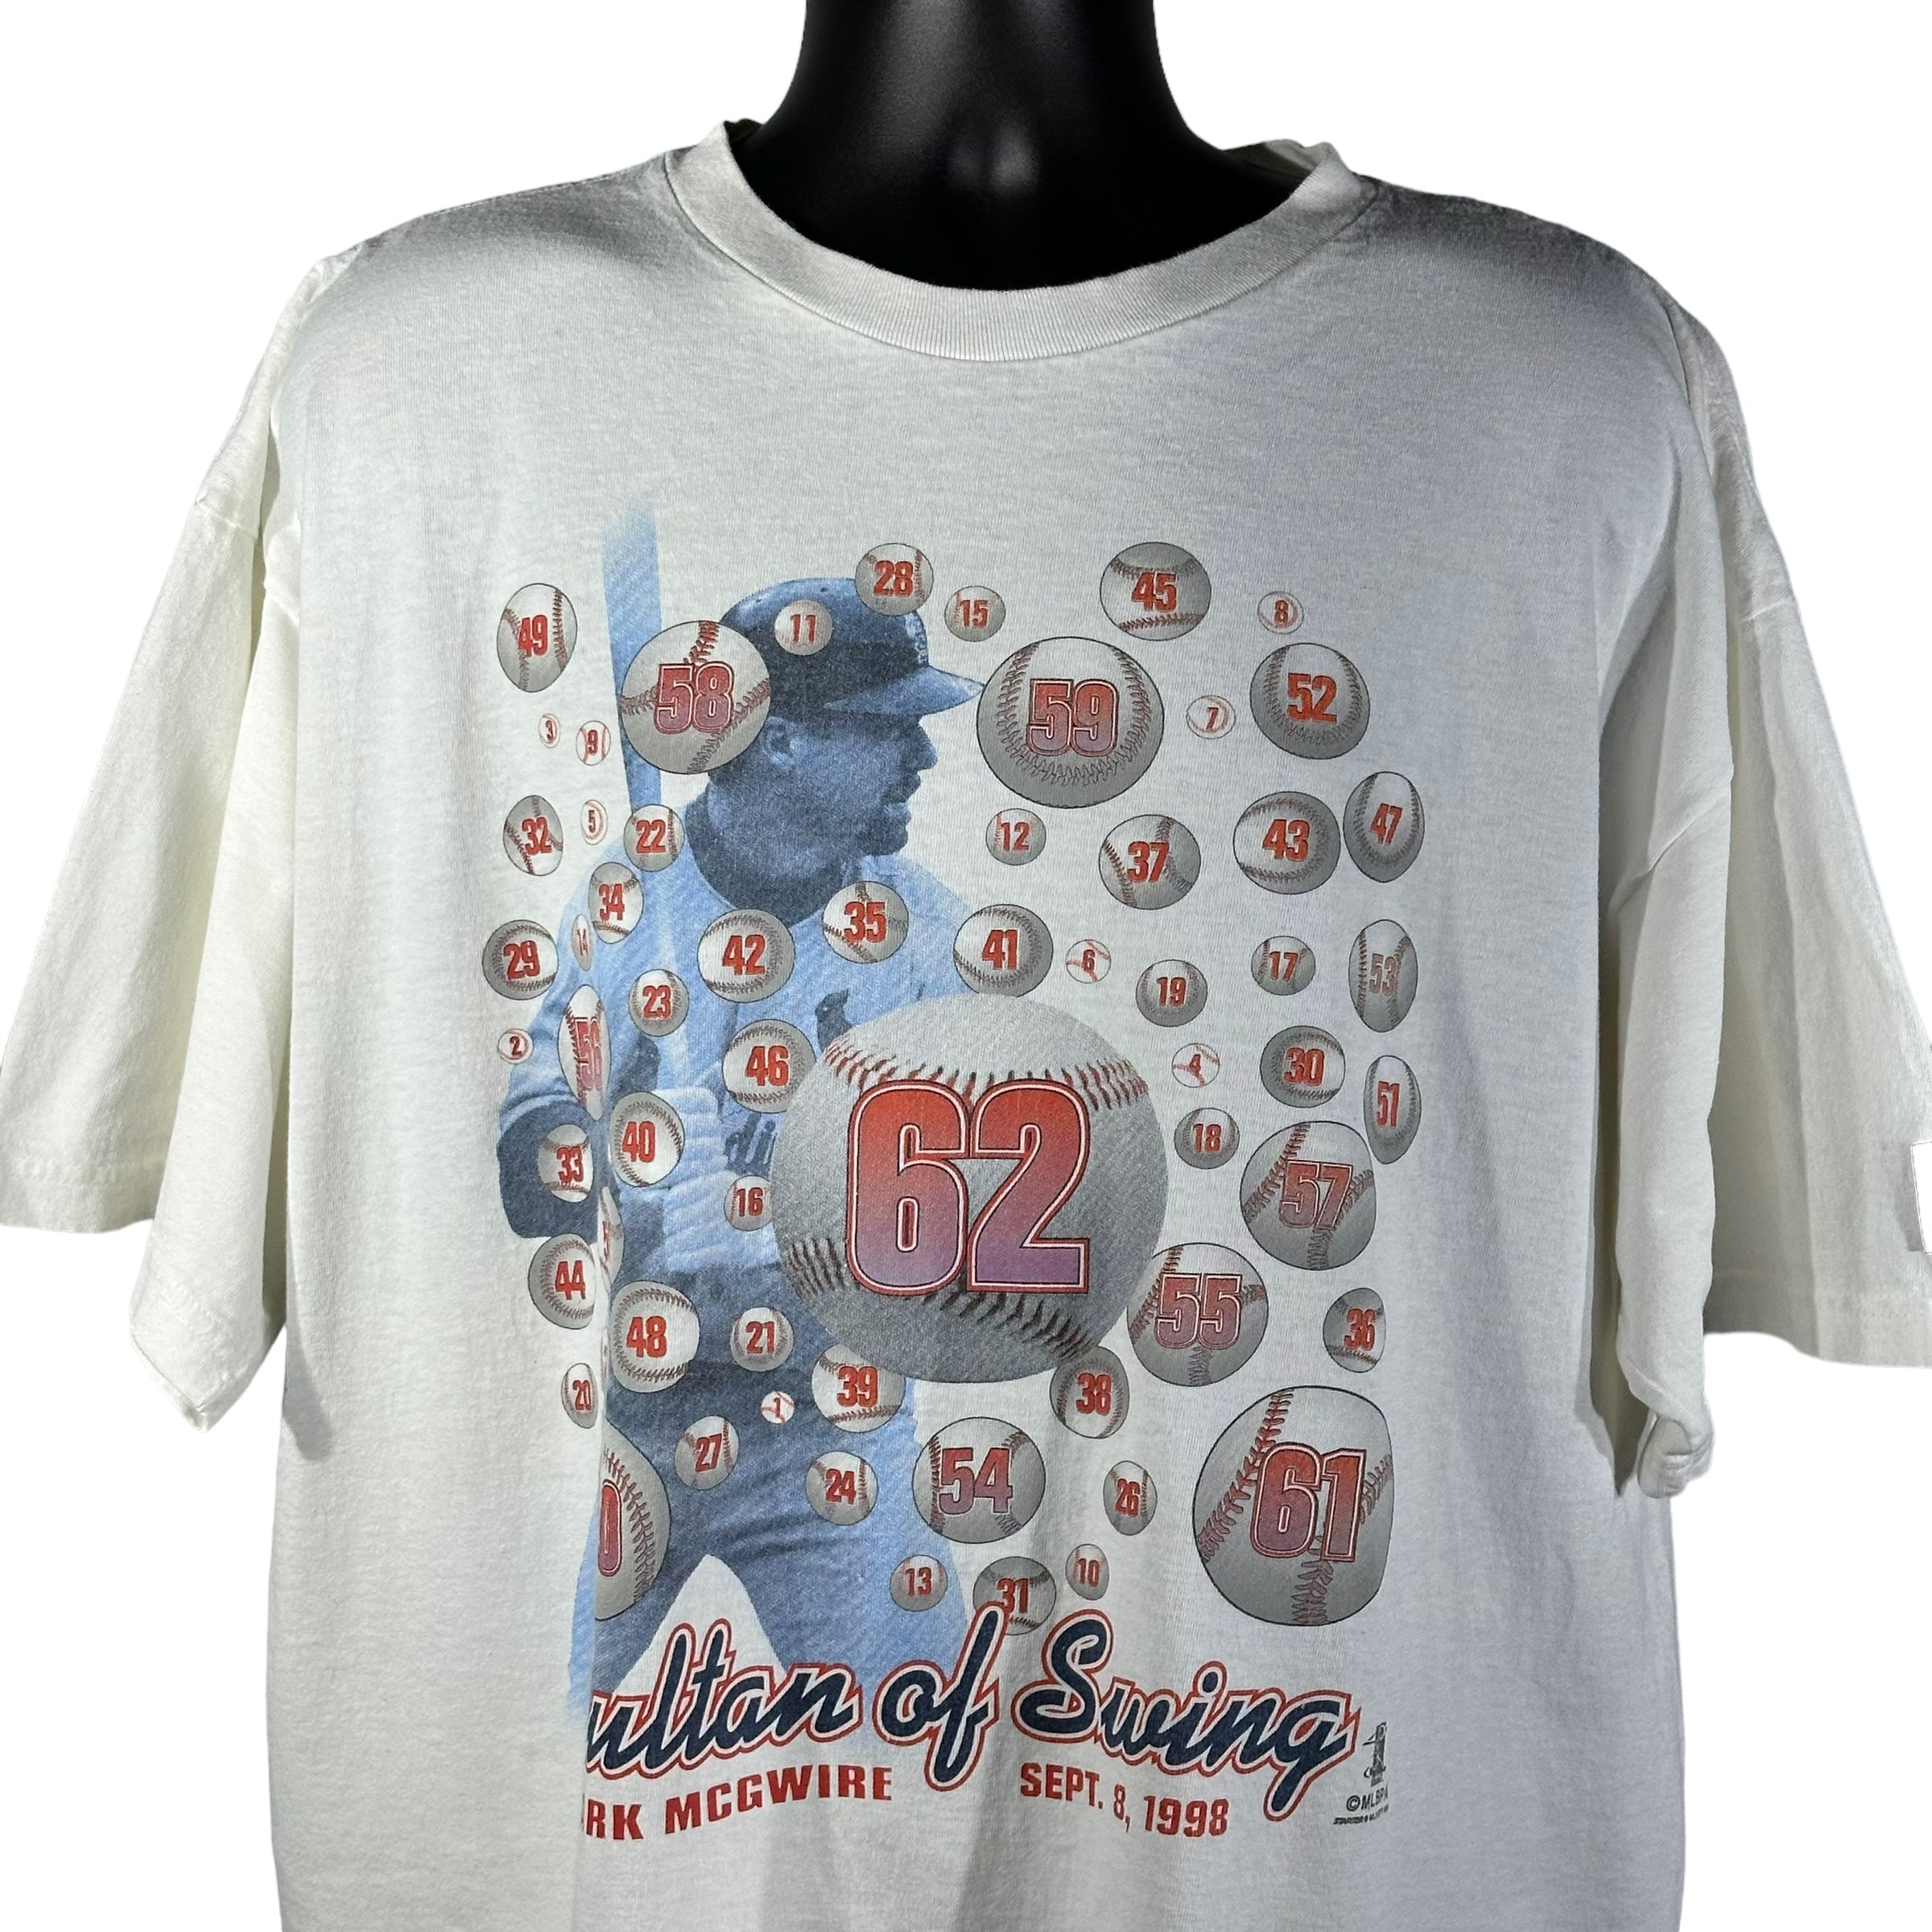 Vintage "Sultan Of Swing" Mark McGwire Starter Tee 1998